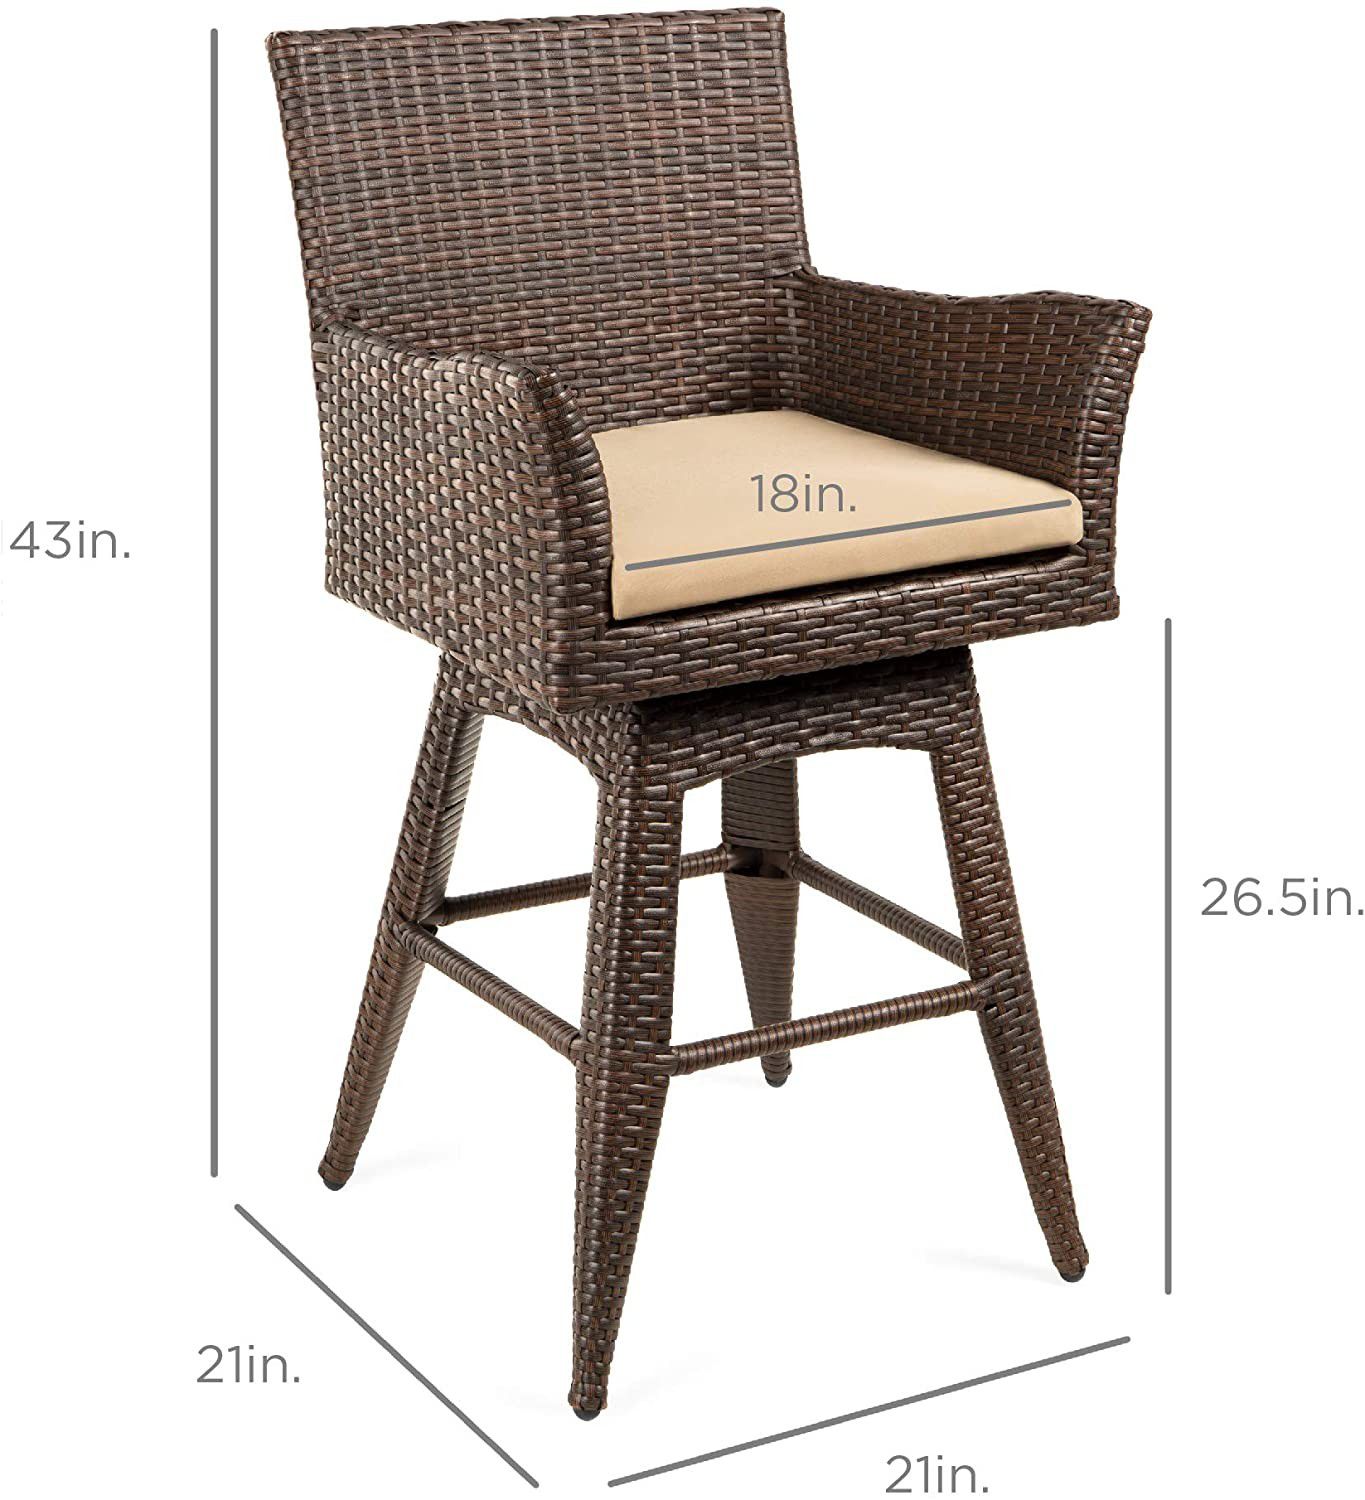 360° Counter-Height Swivel Chair Bar Stool with Plush Cushion